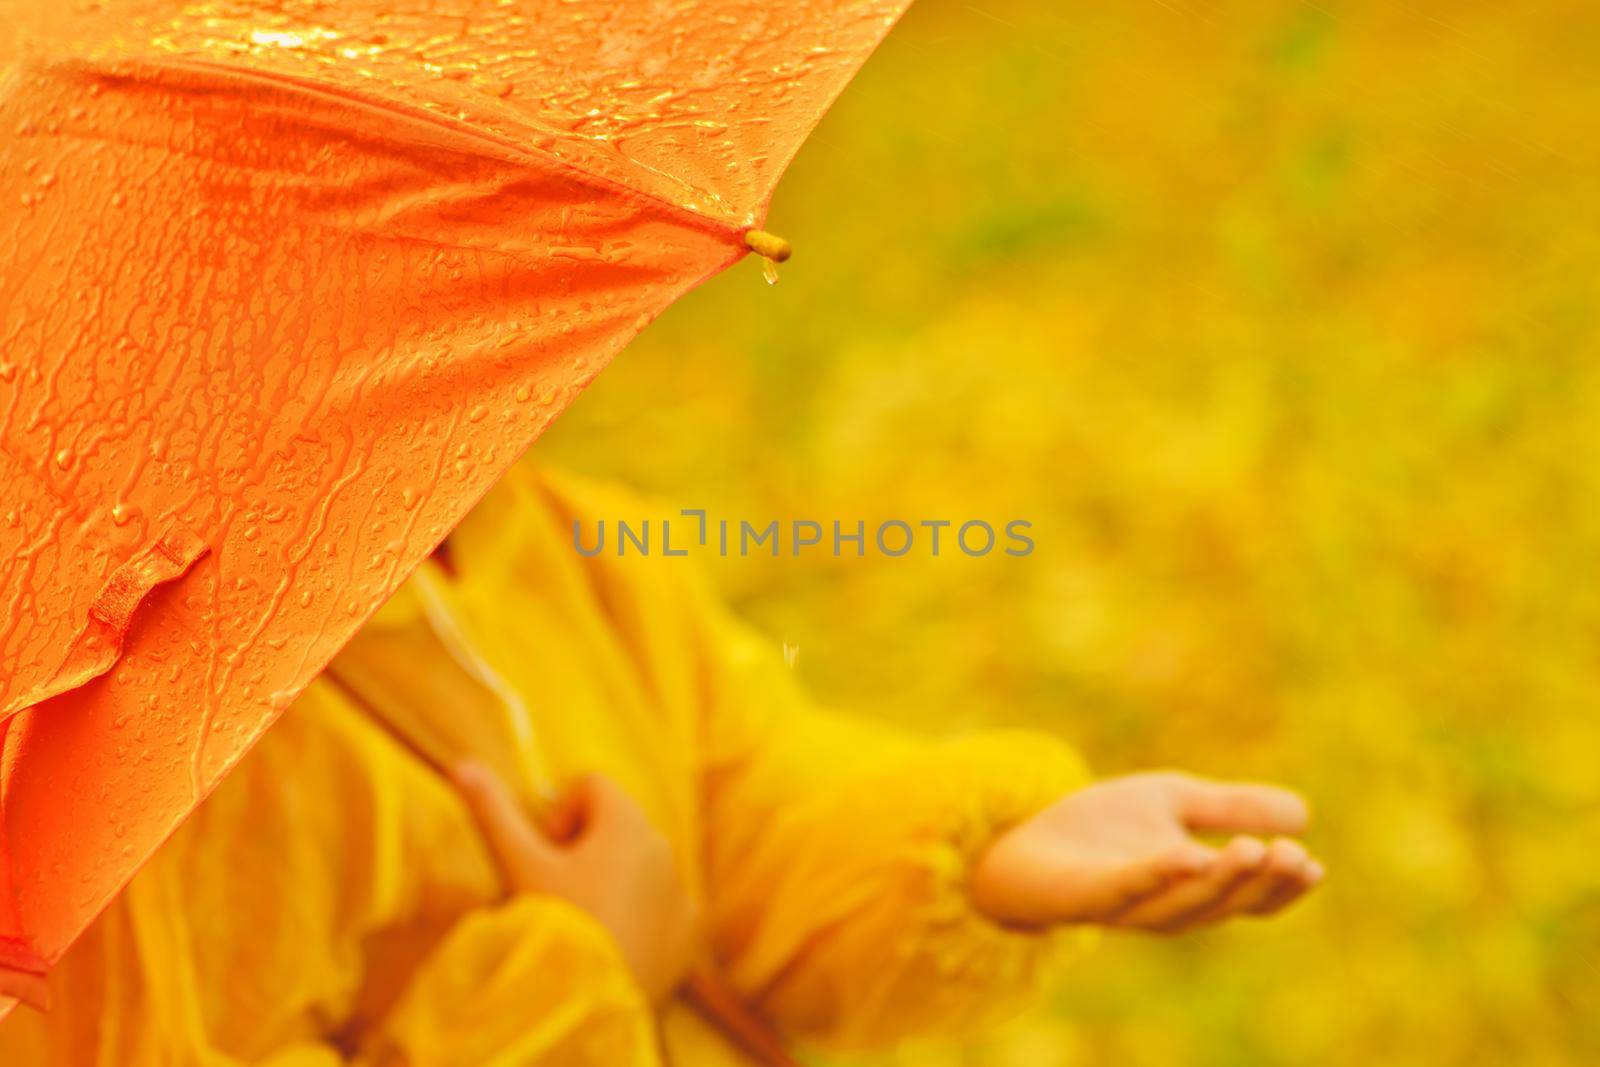 children's hand in the rain, drops falling from a orange umbrella. Autumn weather concept